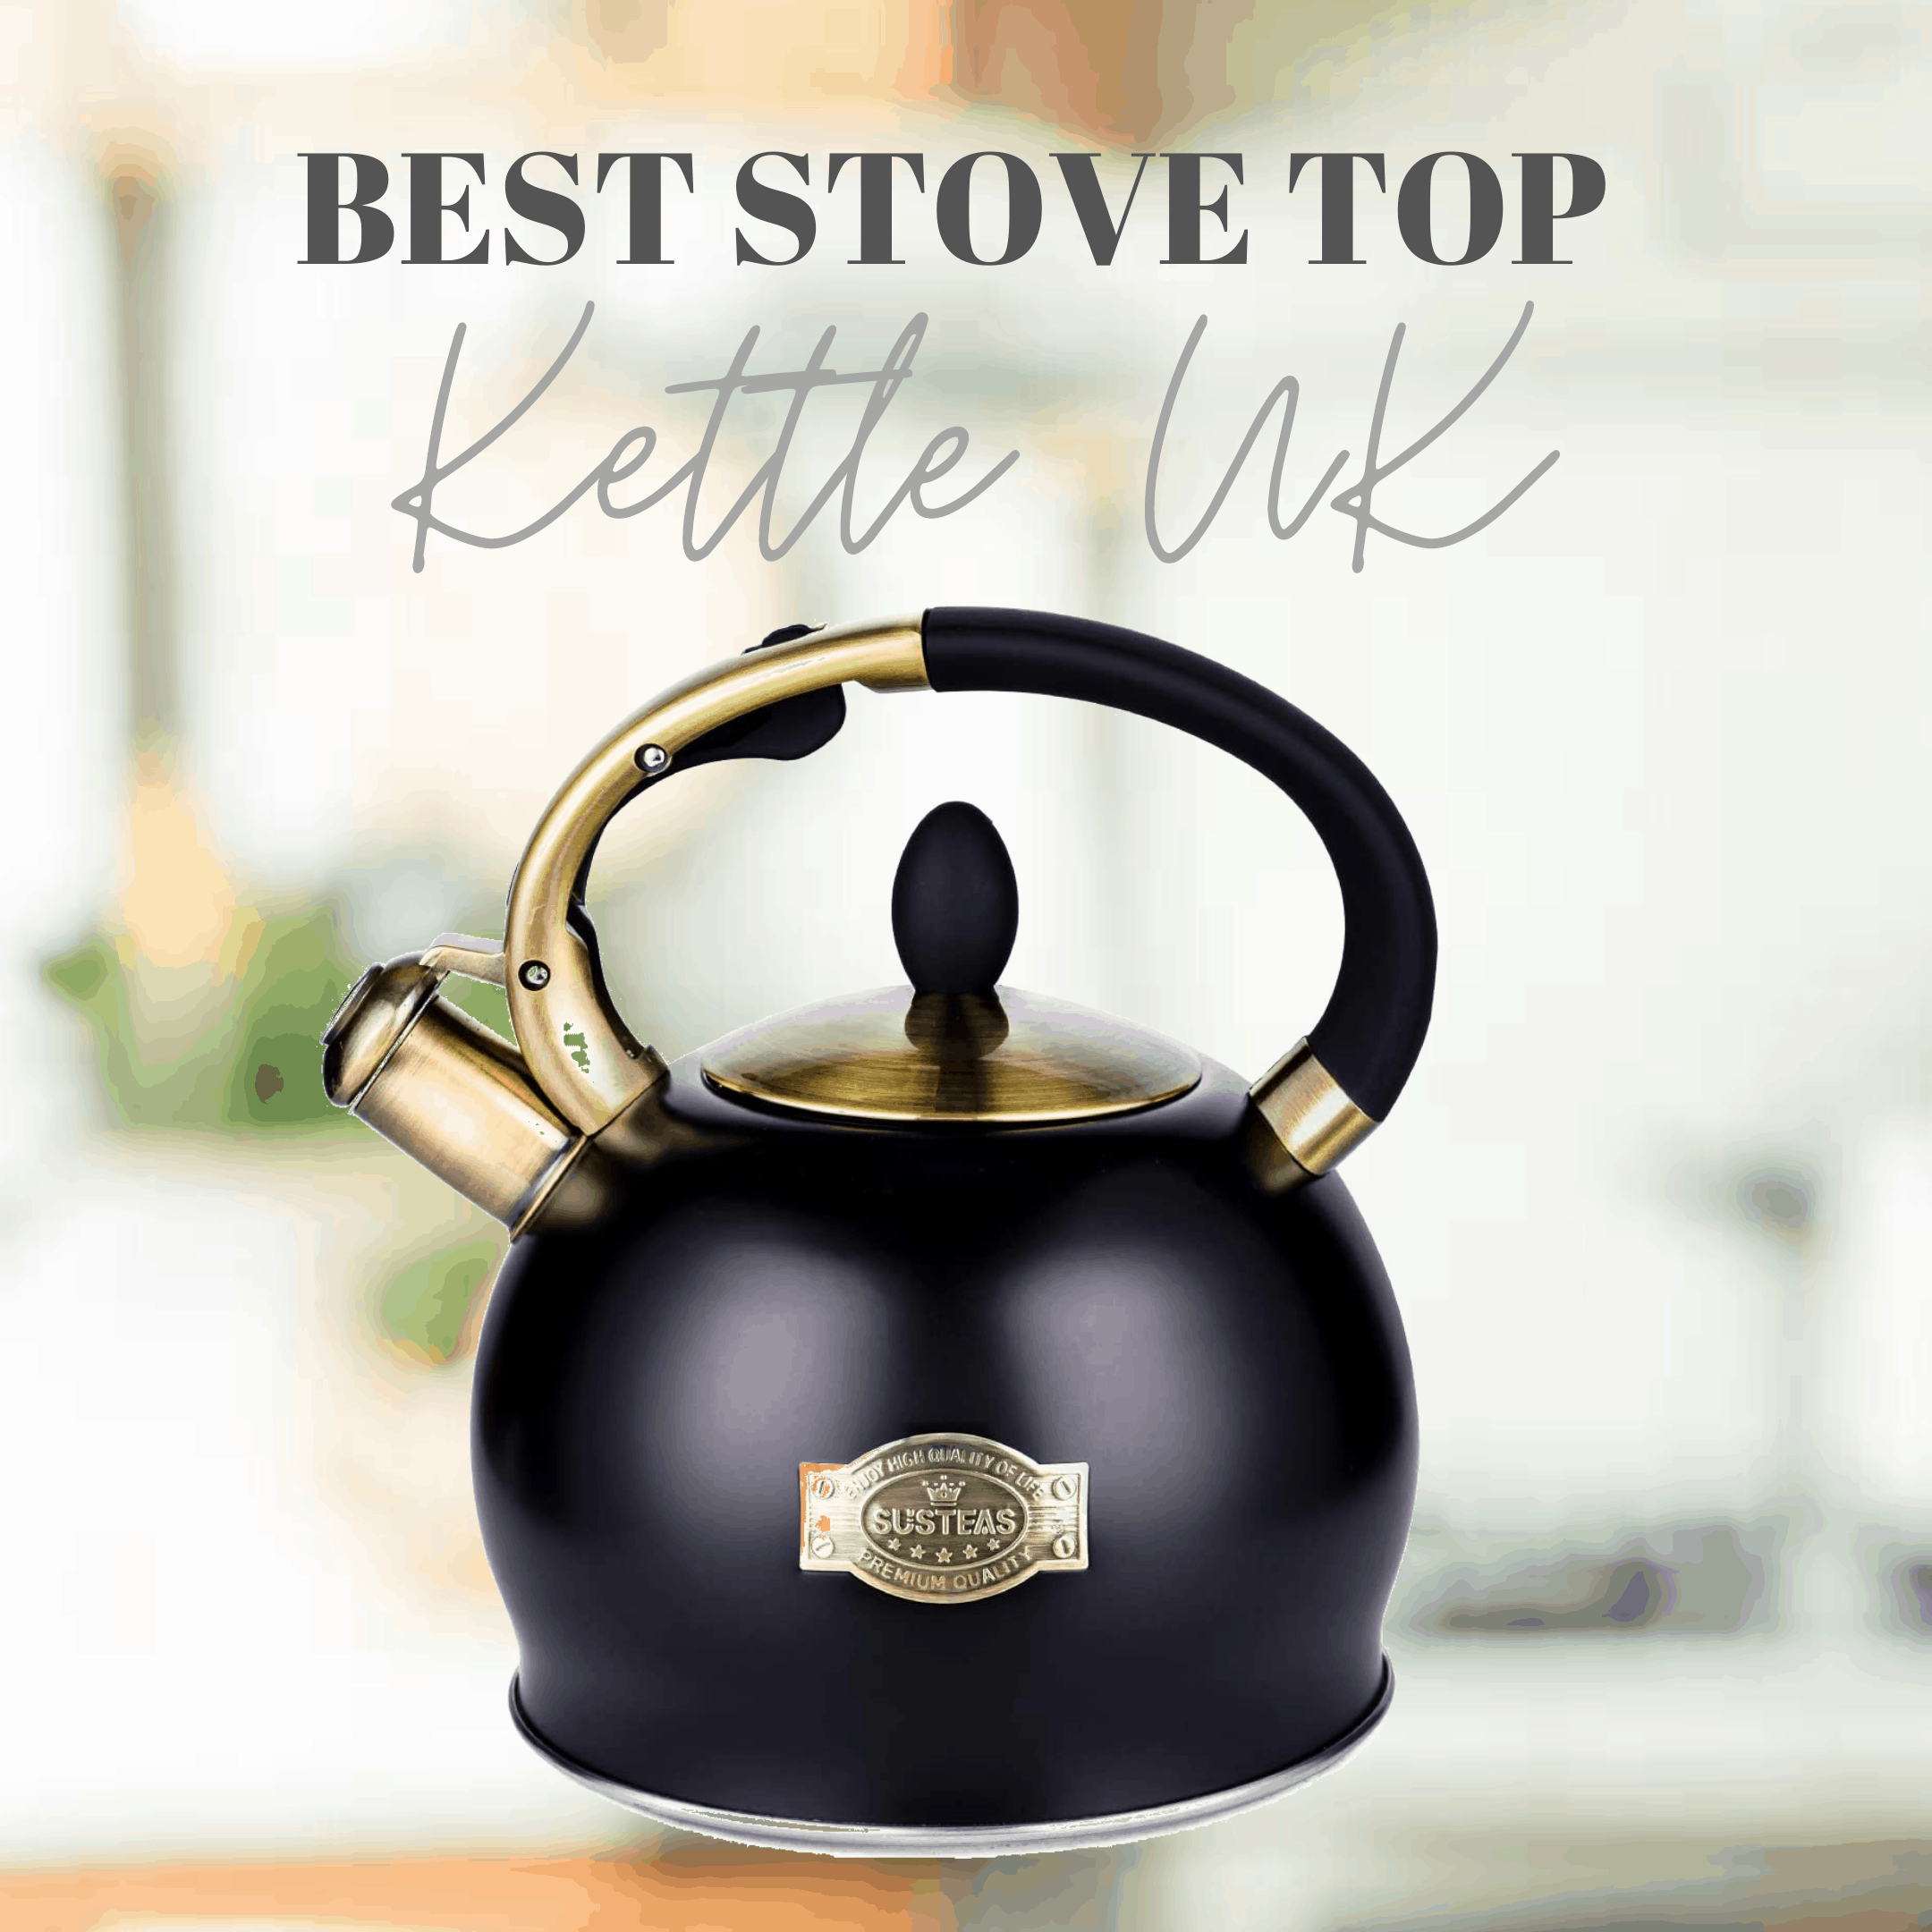 Best Stove Top Kettle UK